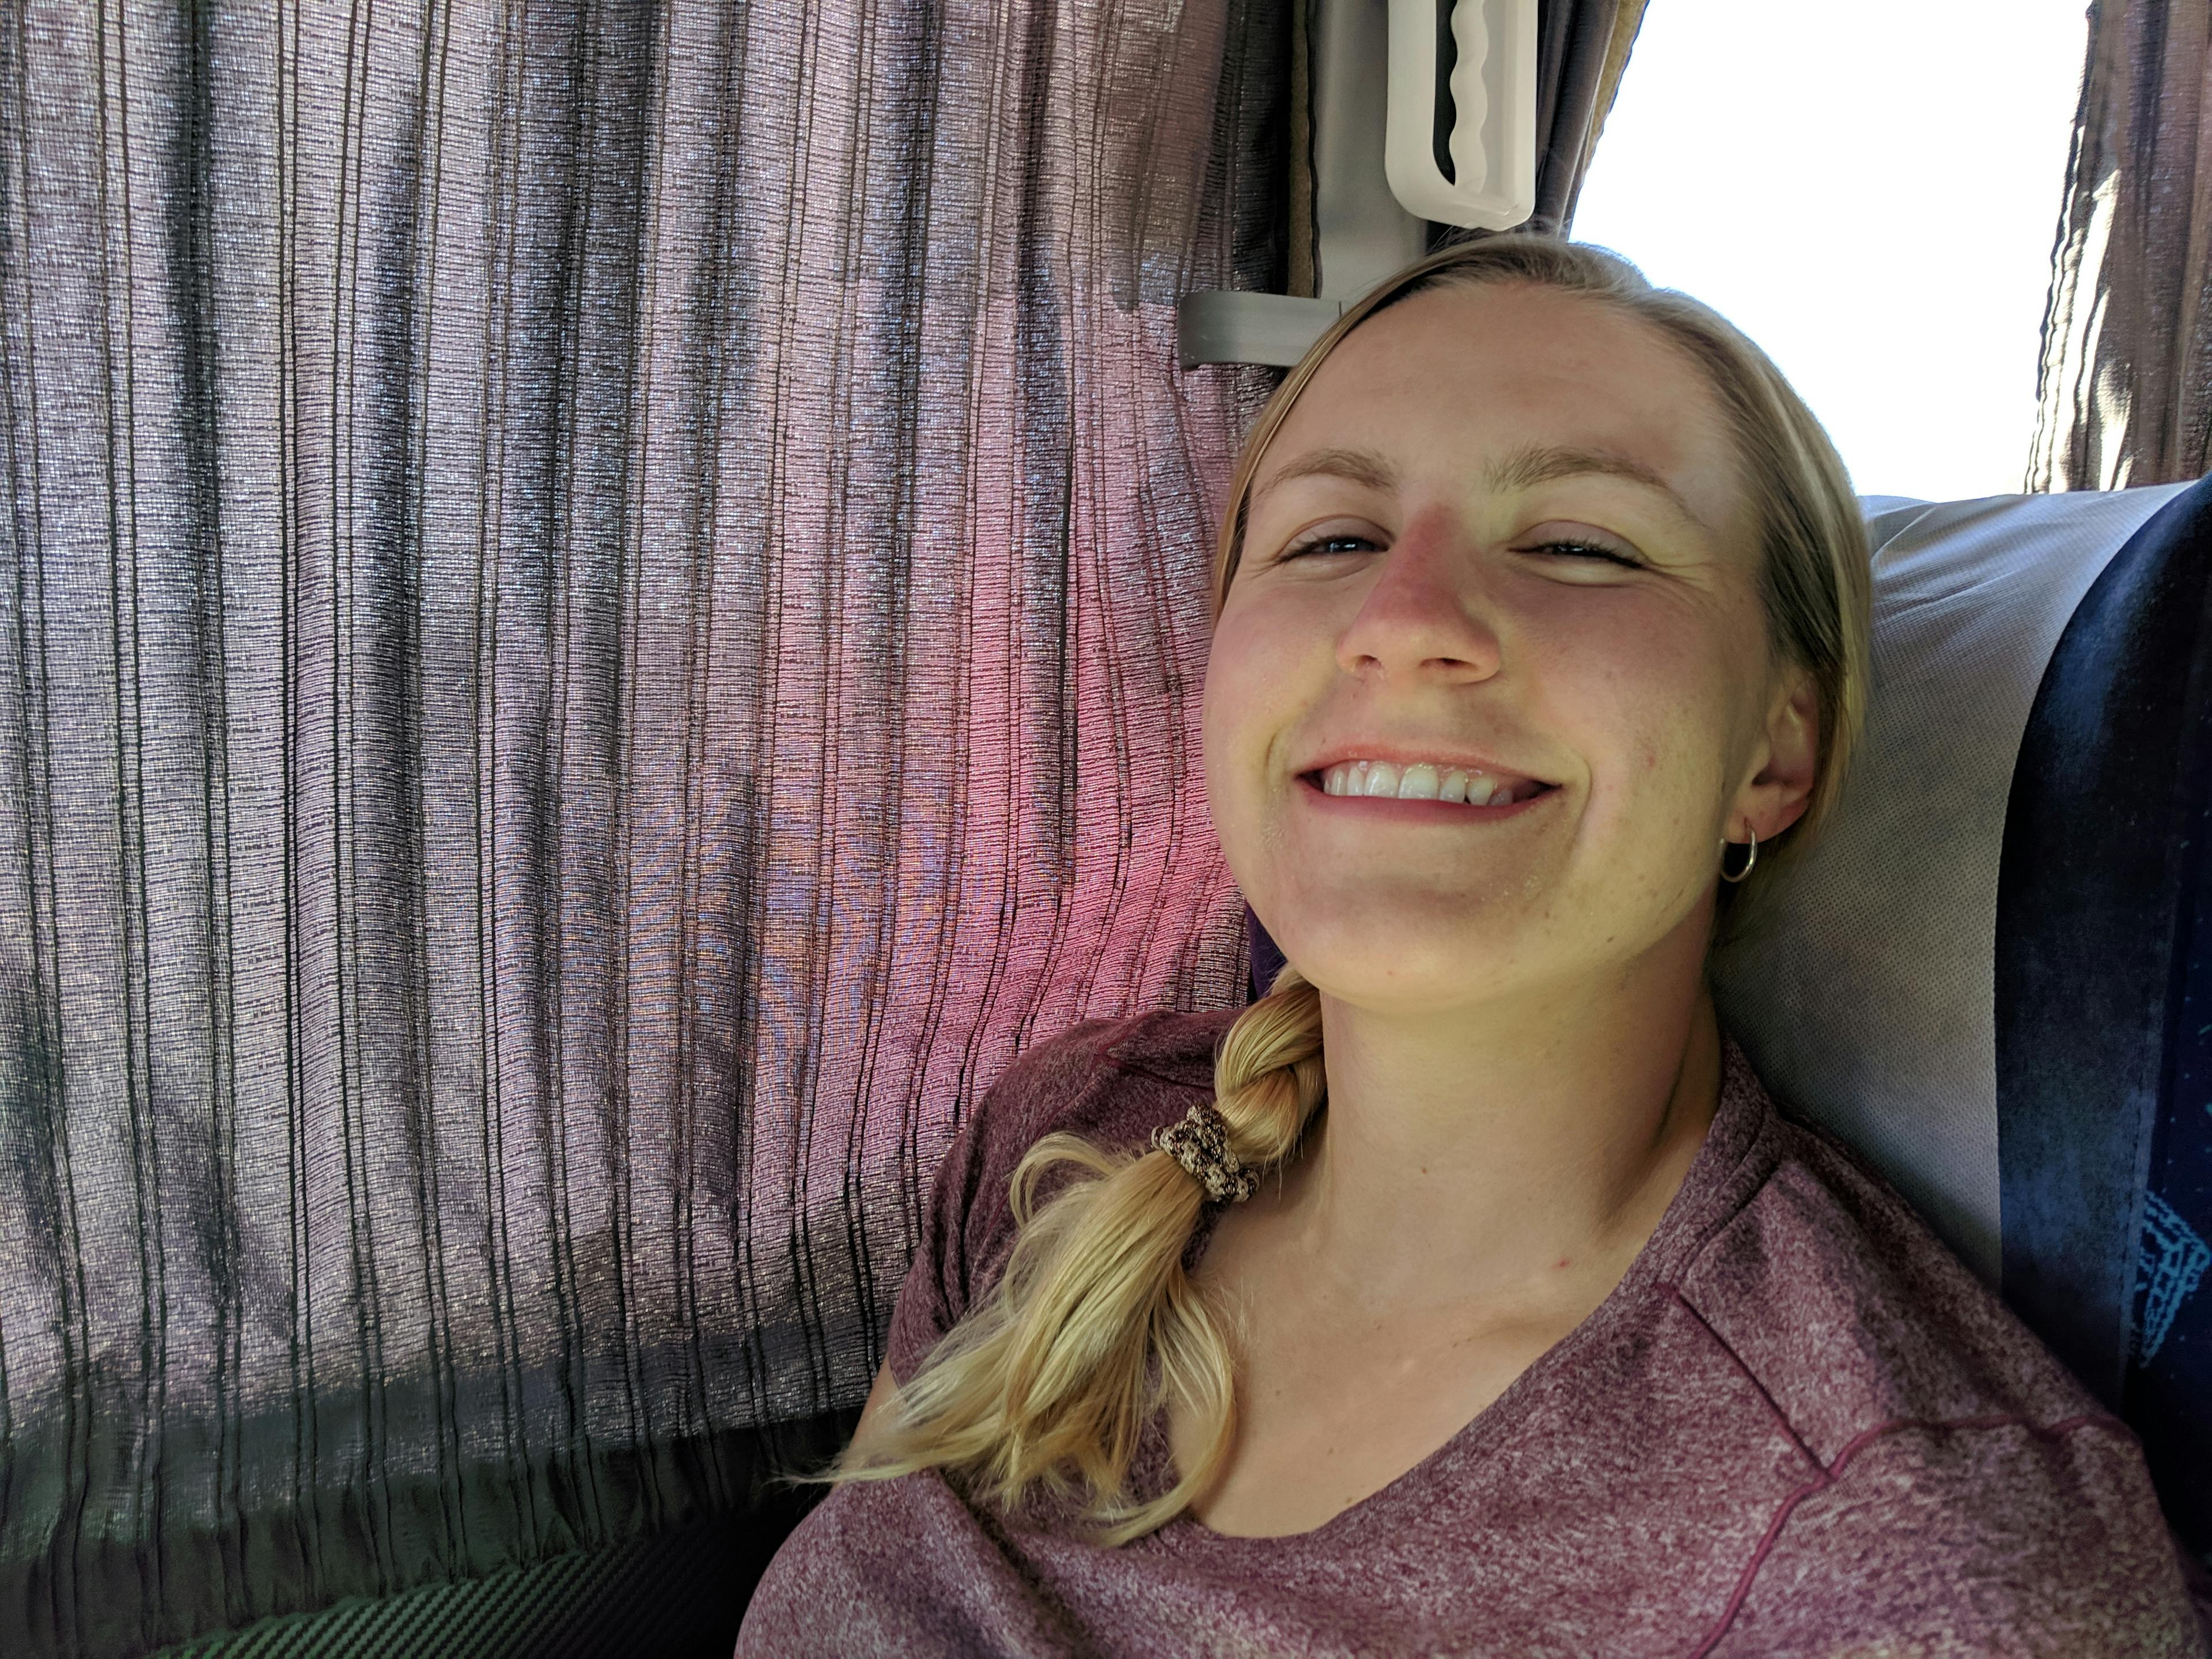 Lauren chilling on the bus